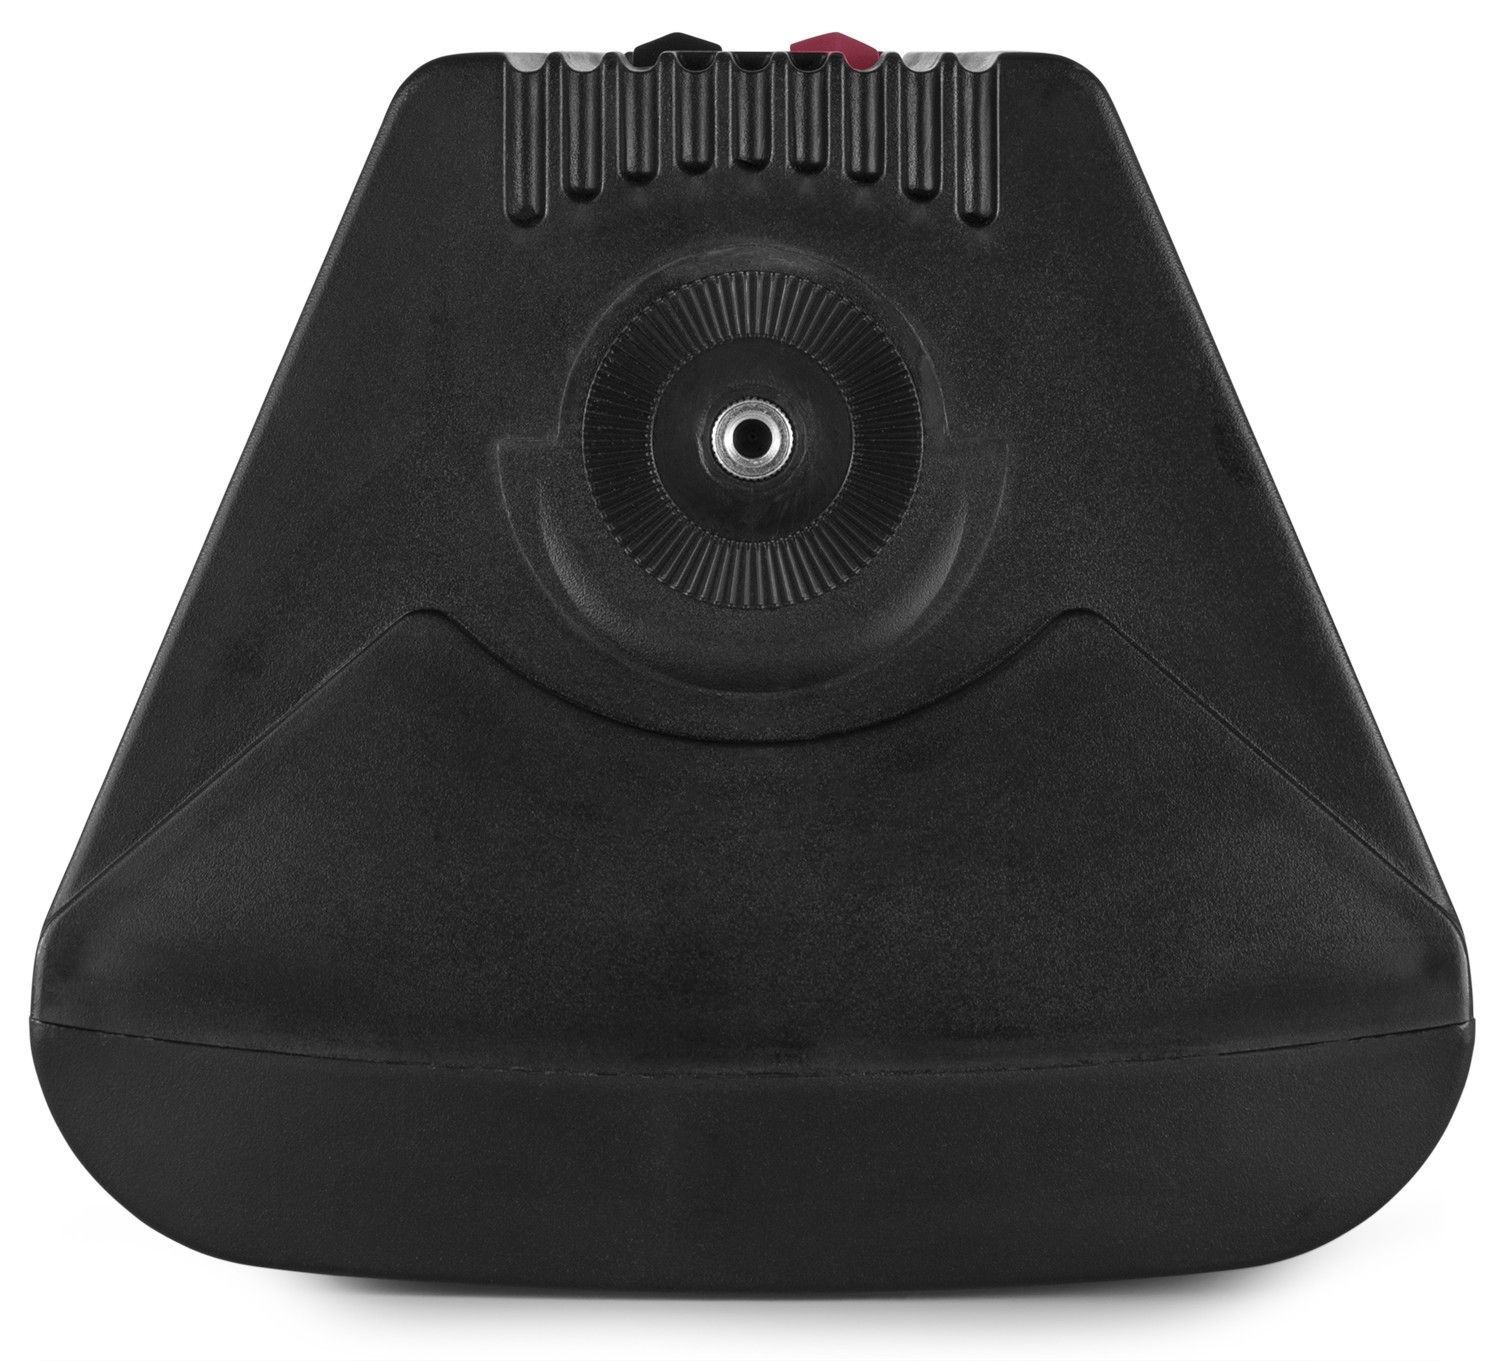 Retourdeal power dynamics bgb50 zwarte bluetooth speakerset voor 5